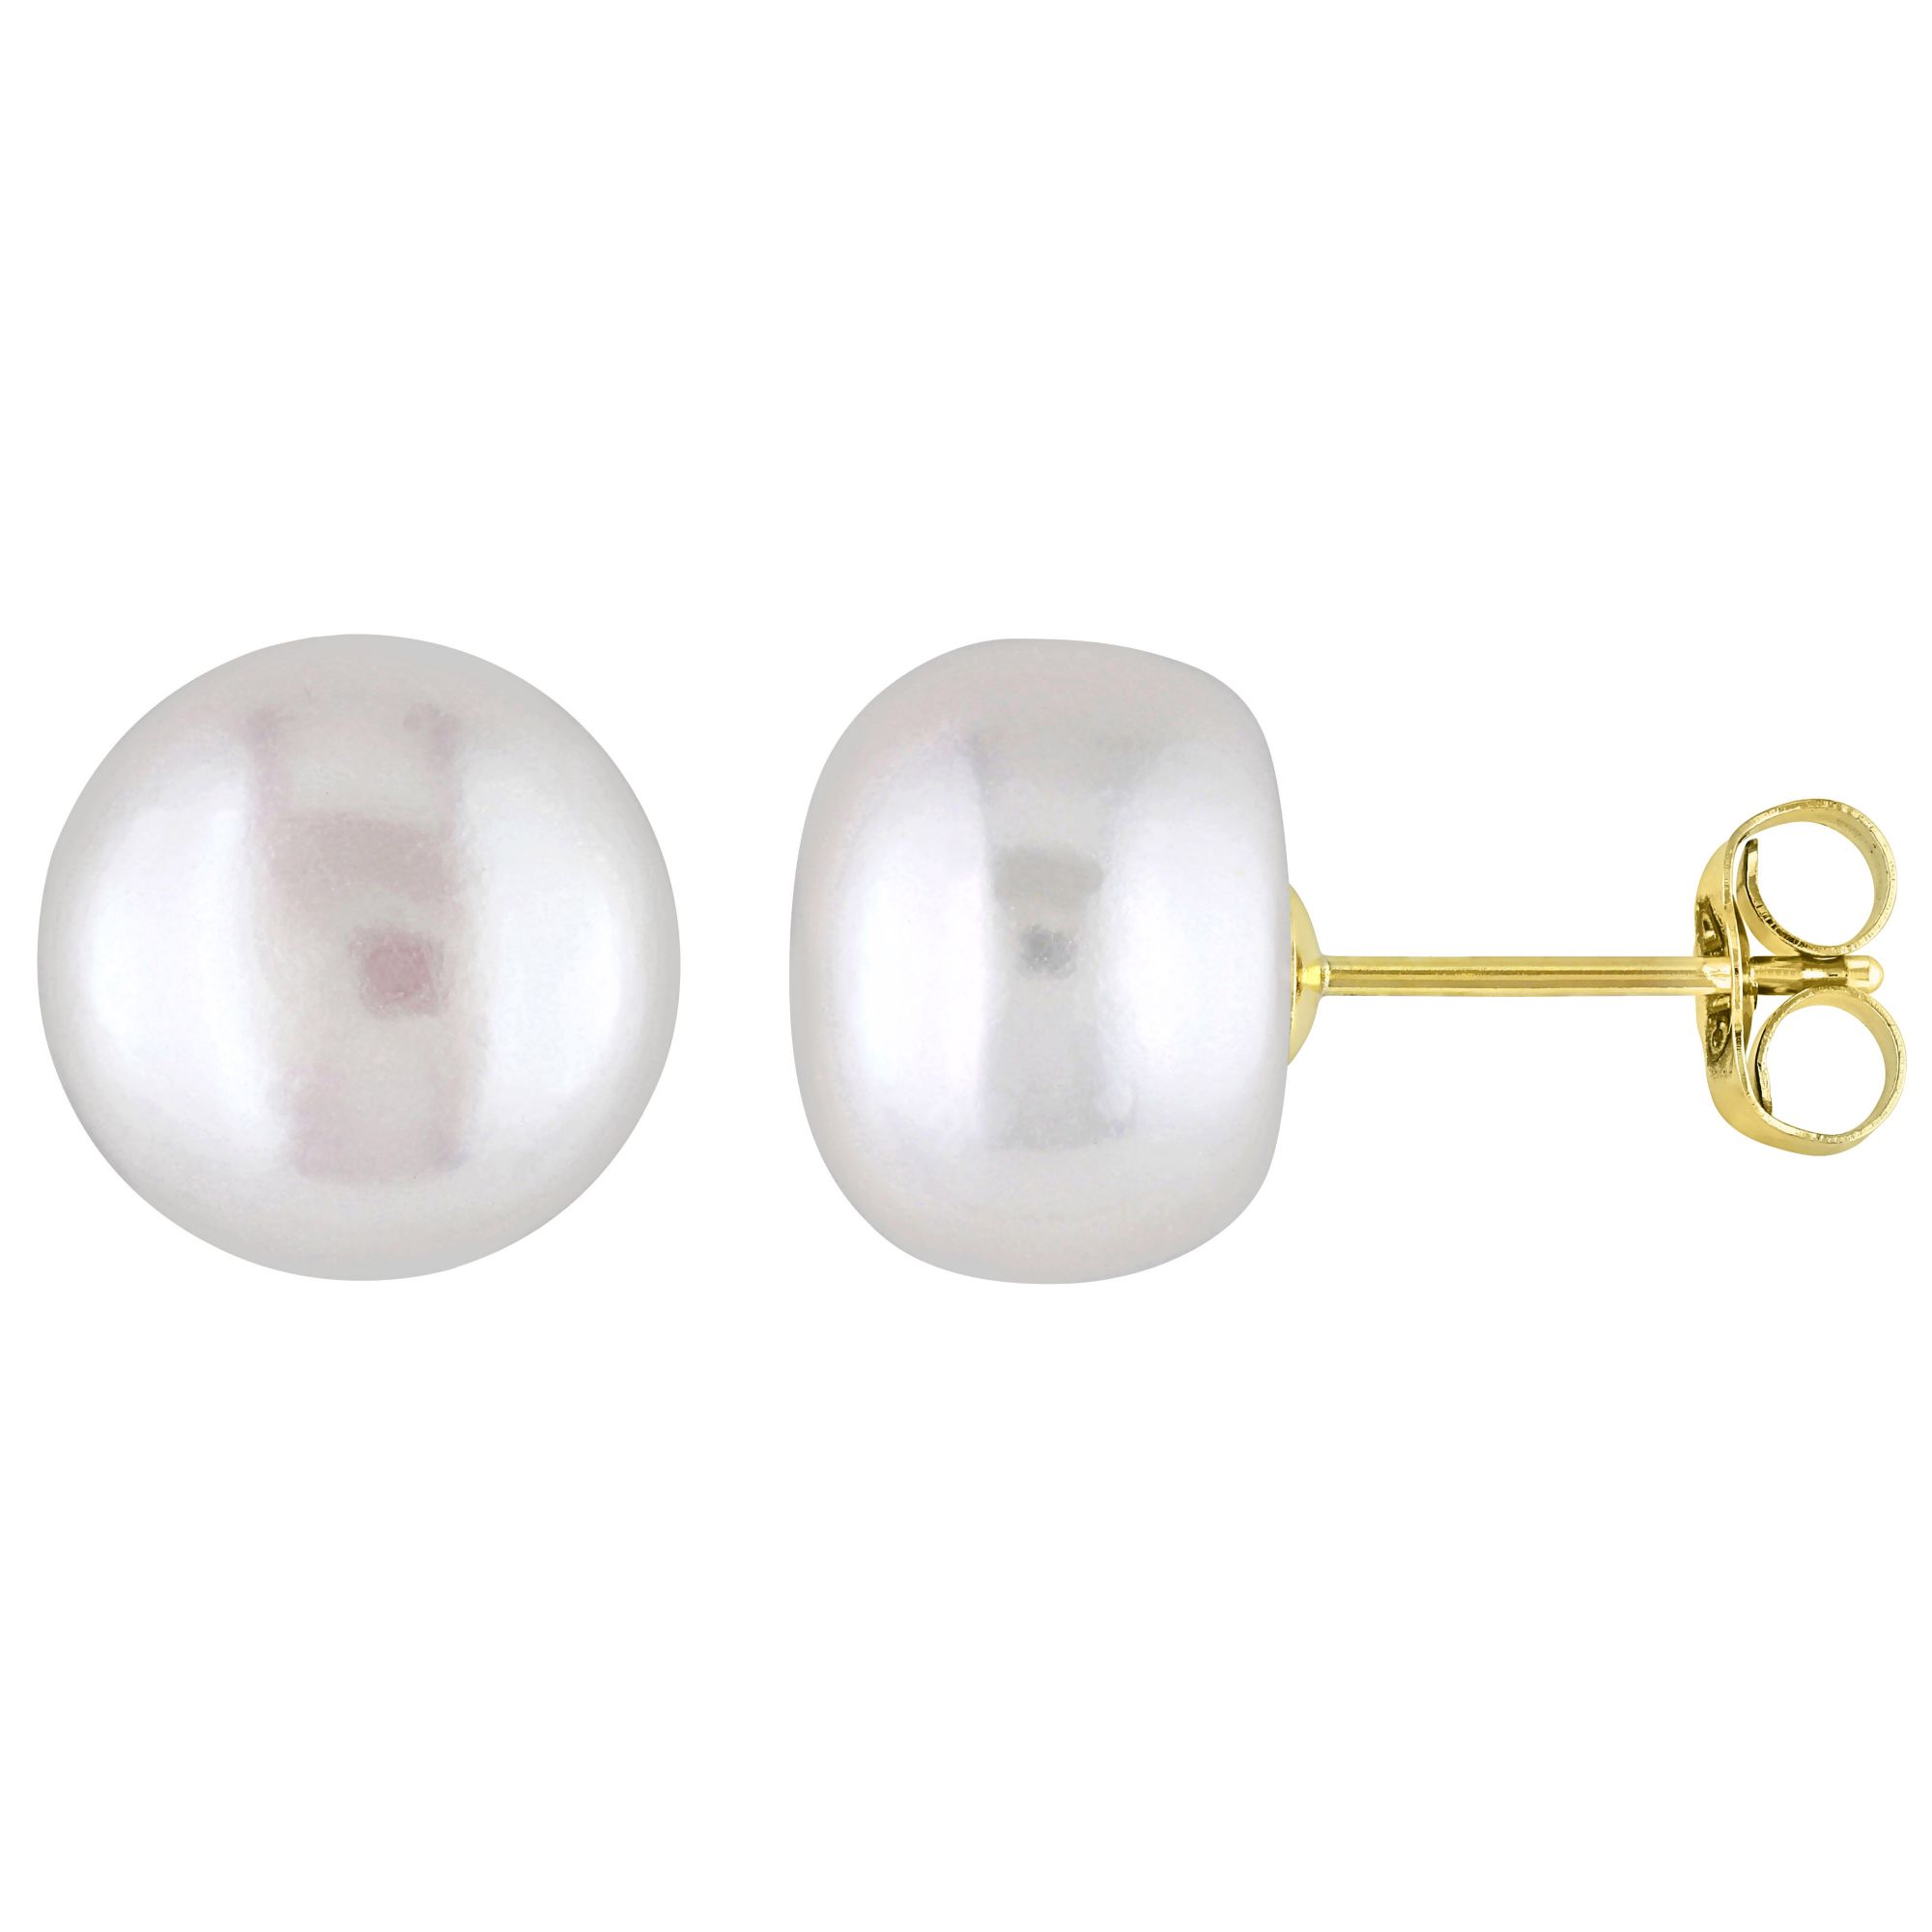 9-10mm Cultured Freshwater Pearl Stud Earrings in 10k Yellow Gold